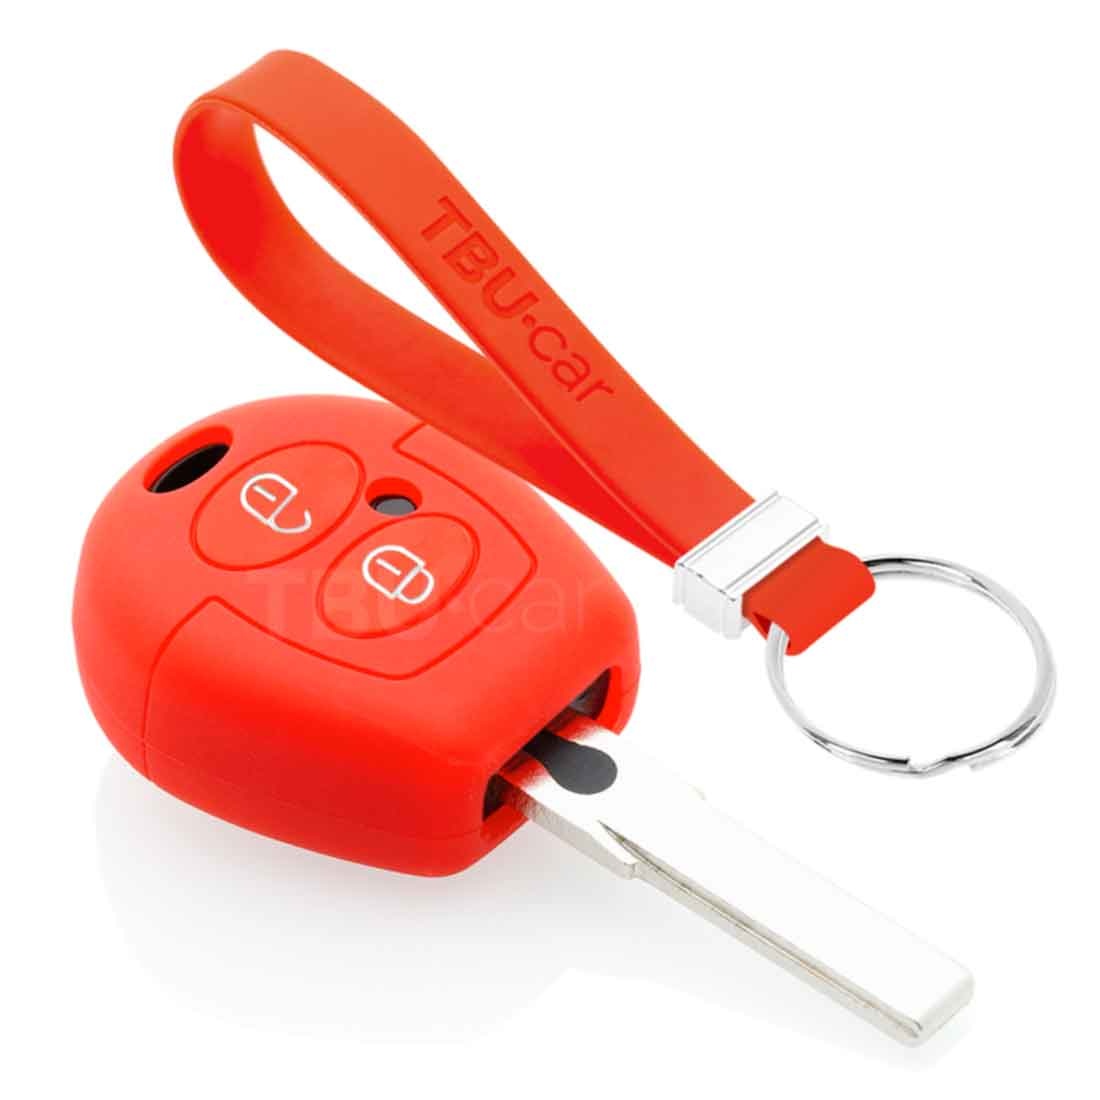 TBU car TBU car Autoschlüssel Hülle kompatibel mit VW 2 Tasten - Schutzhülle aus Silikon - Auto Schlüsselhülle Cover in Rot